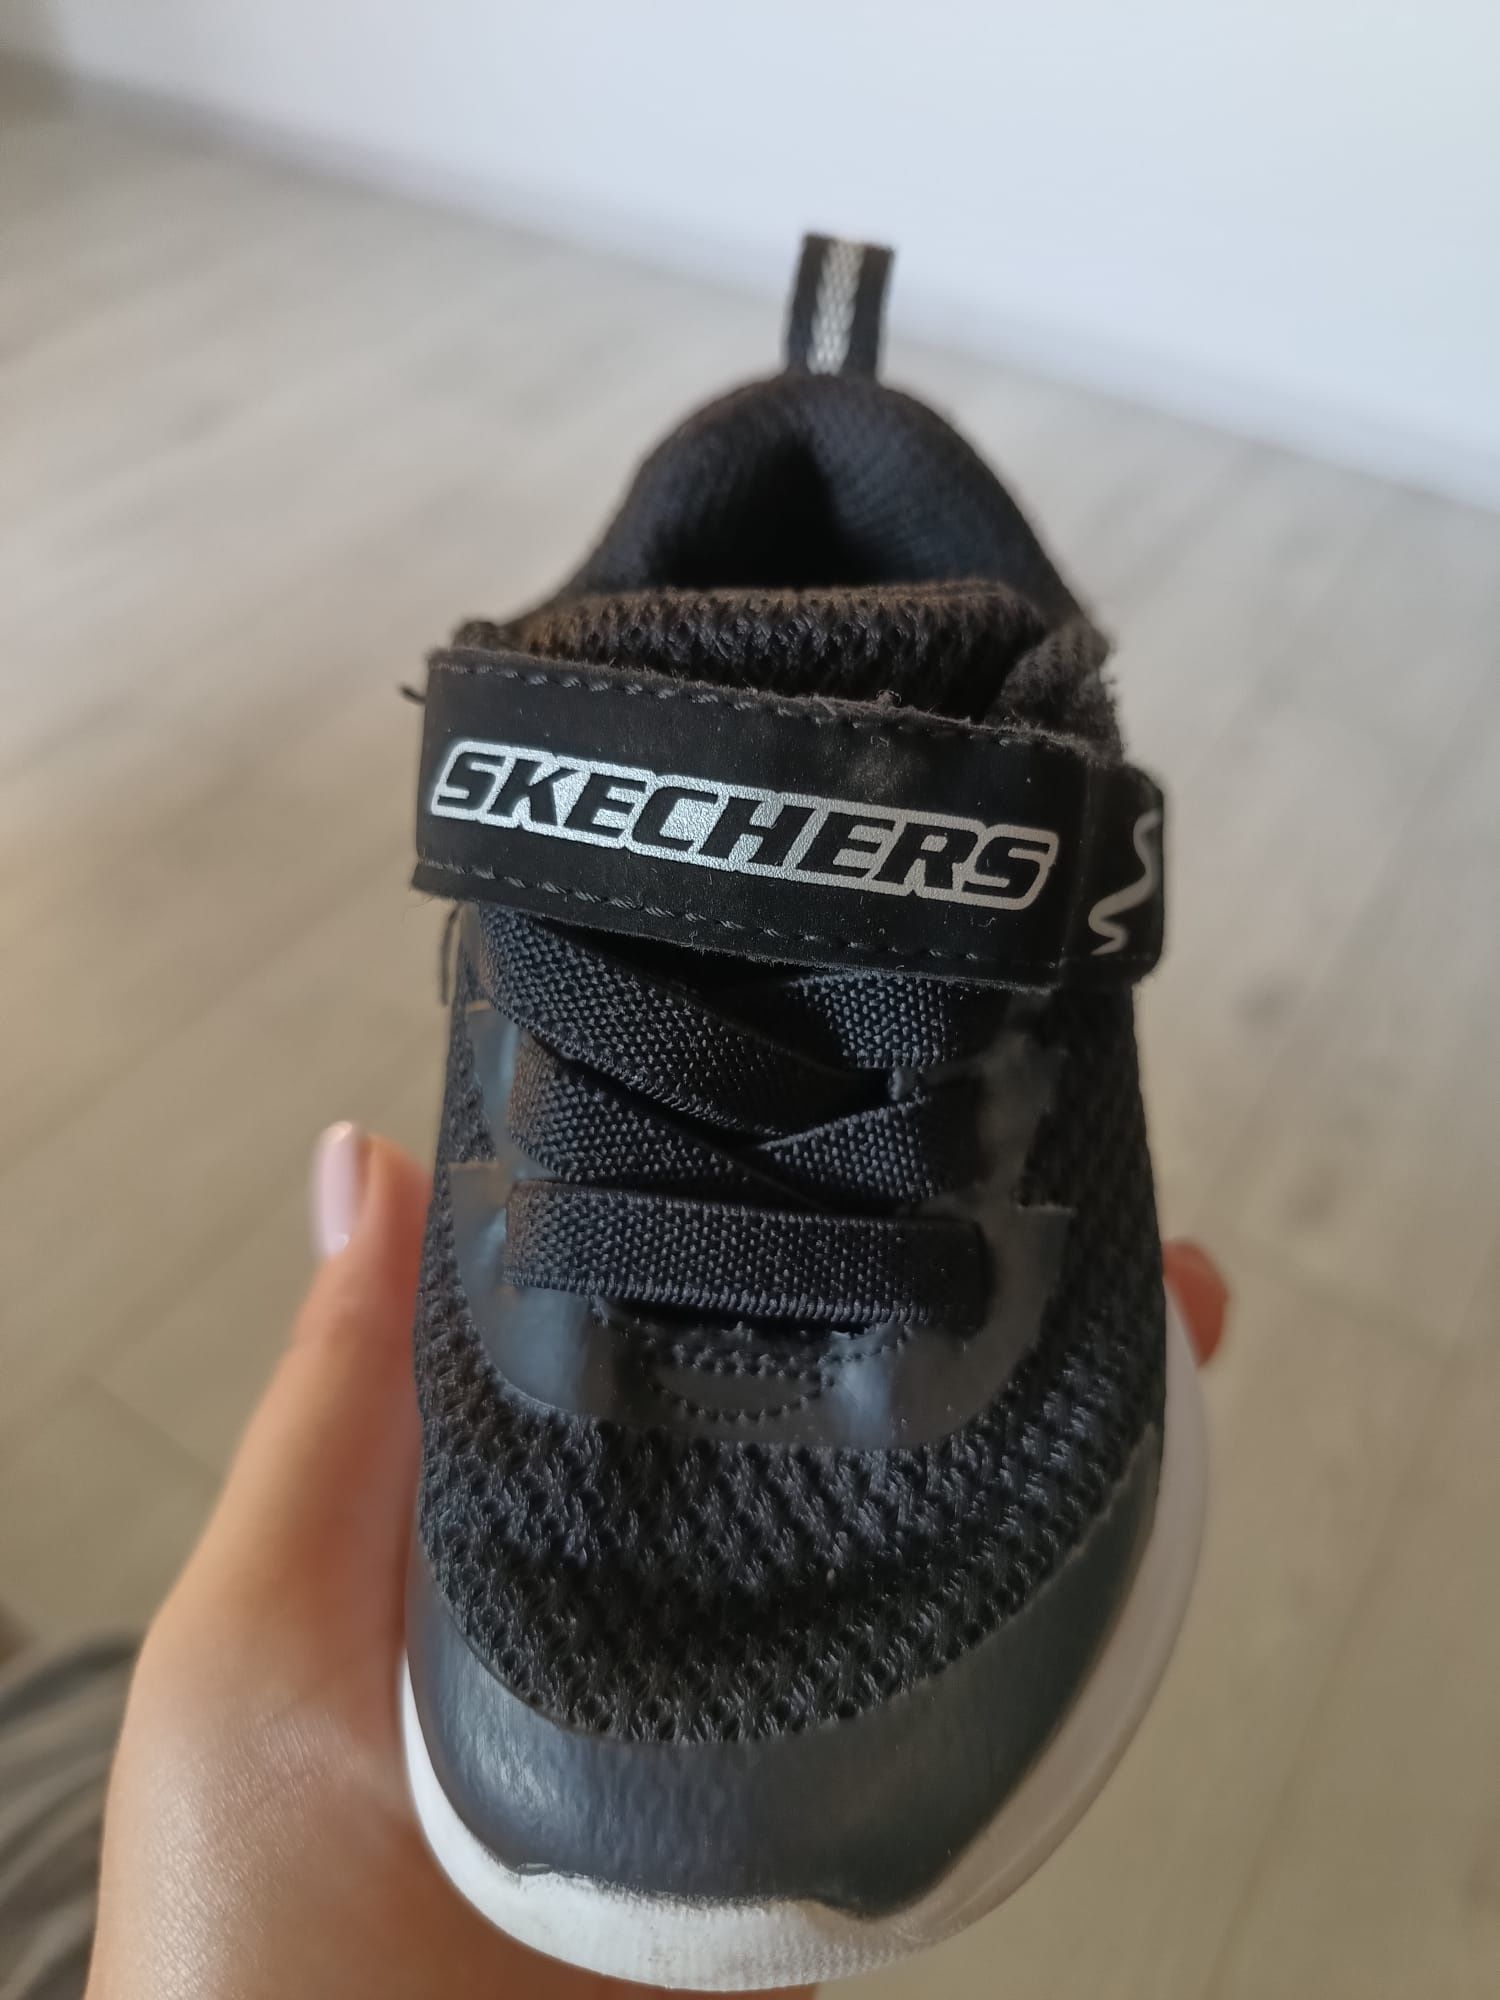 Adidasi Skechers marimea 22 foarte intretinuti